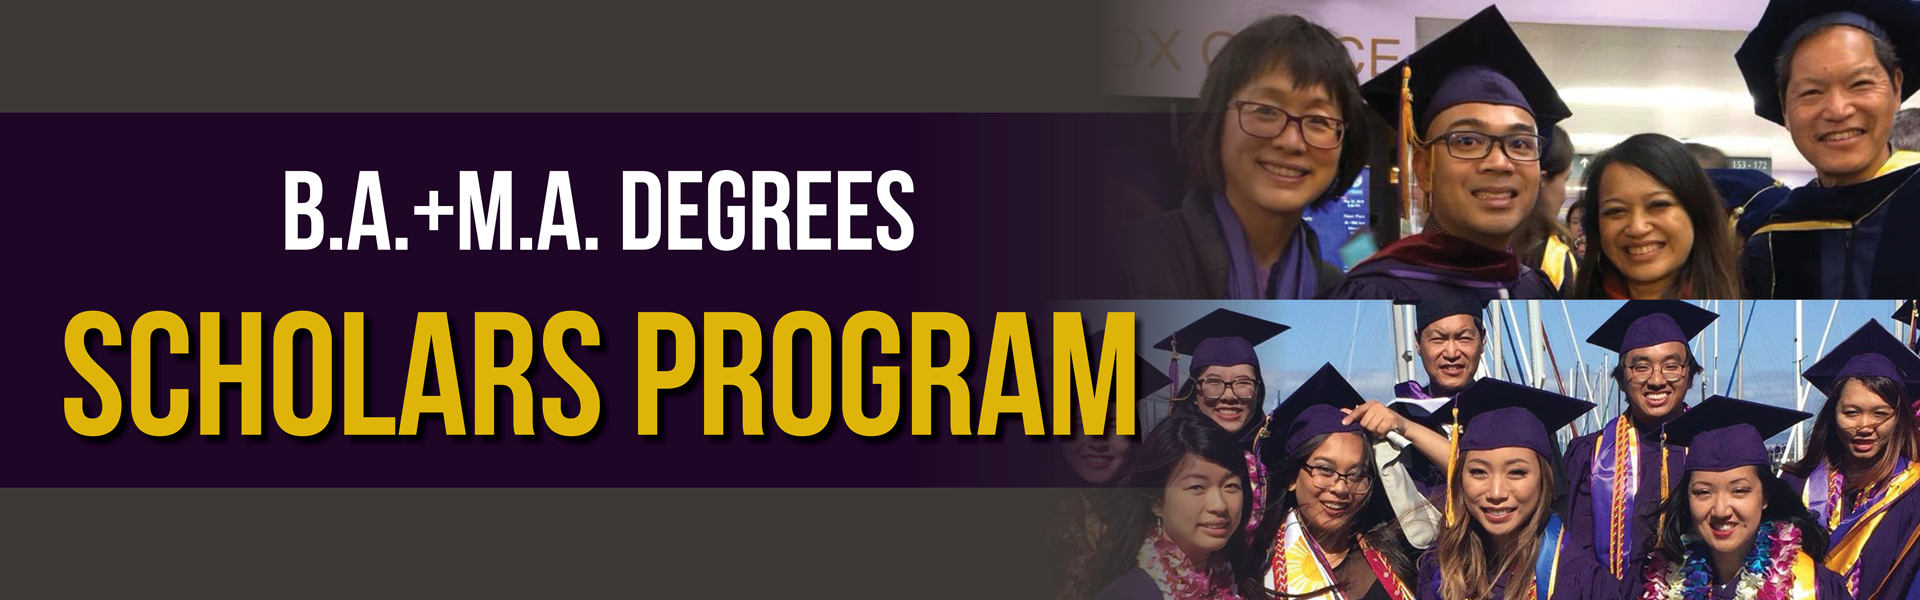 B.A.+M.A. Degrees Scholars Program: groups of ASS graduates